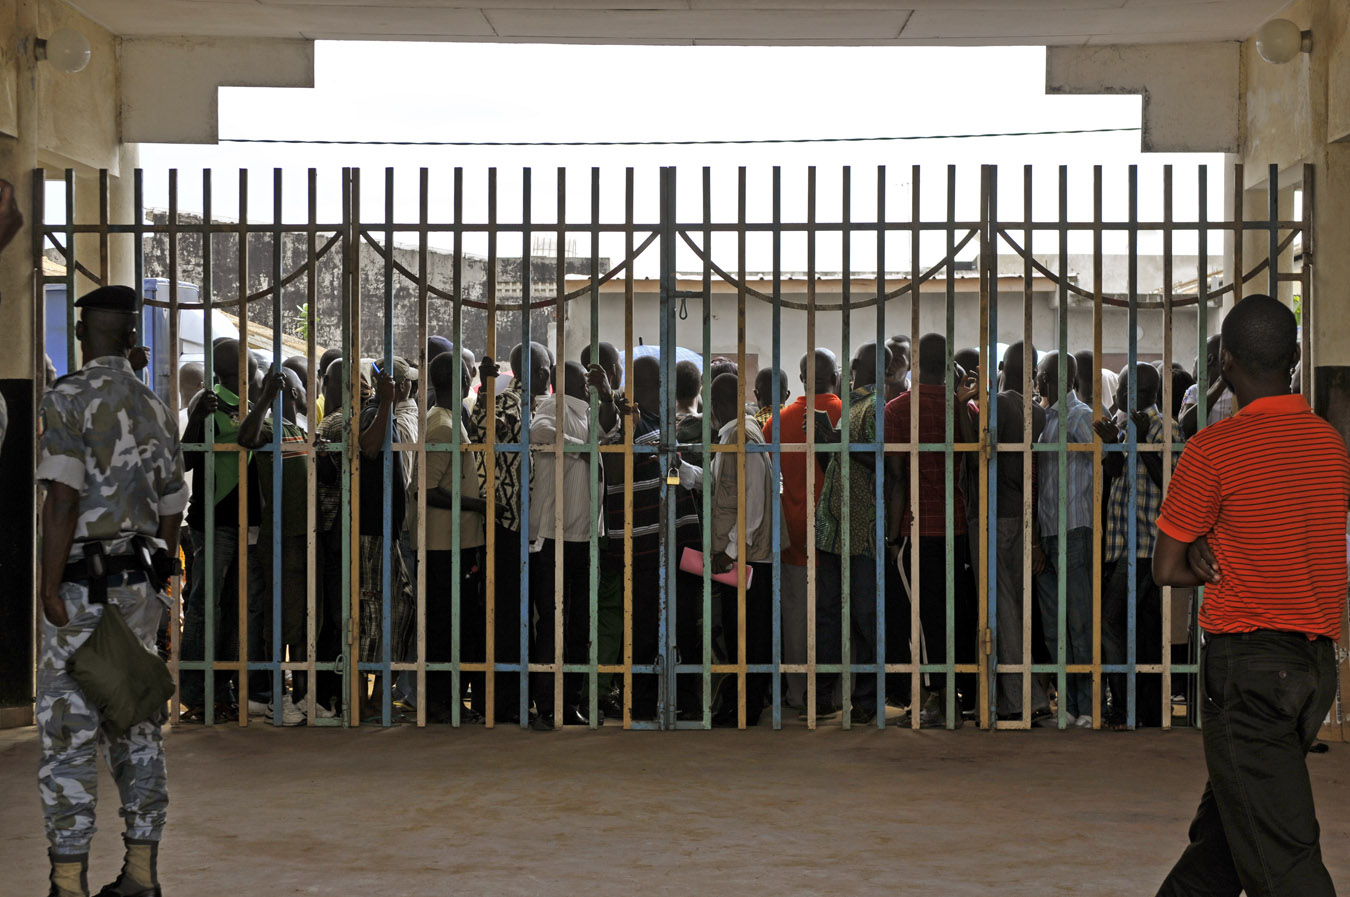 Voters wait outside closed gates in Cote d'Ivoire